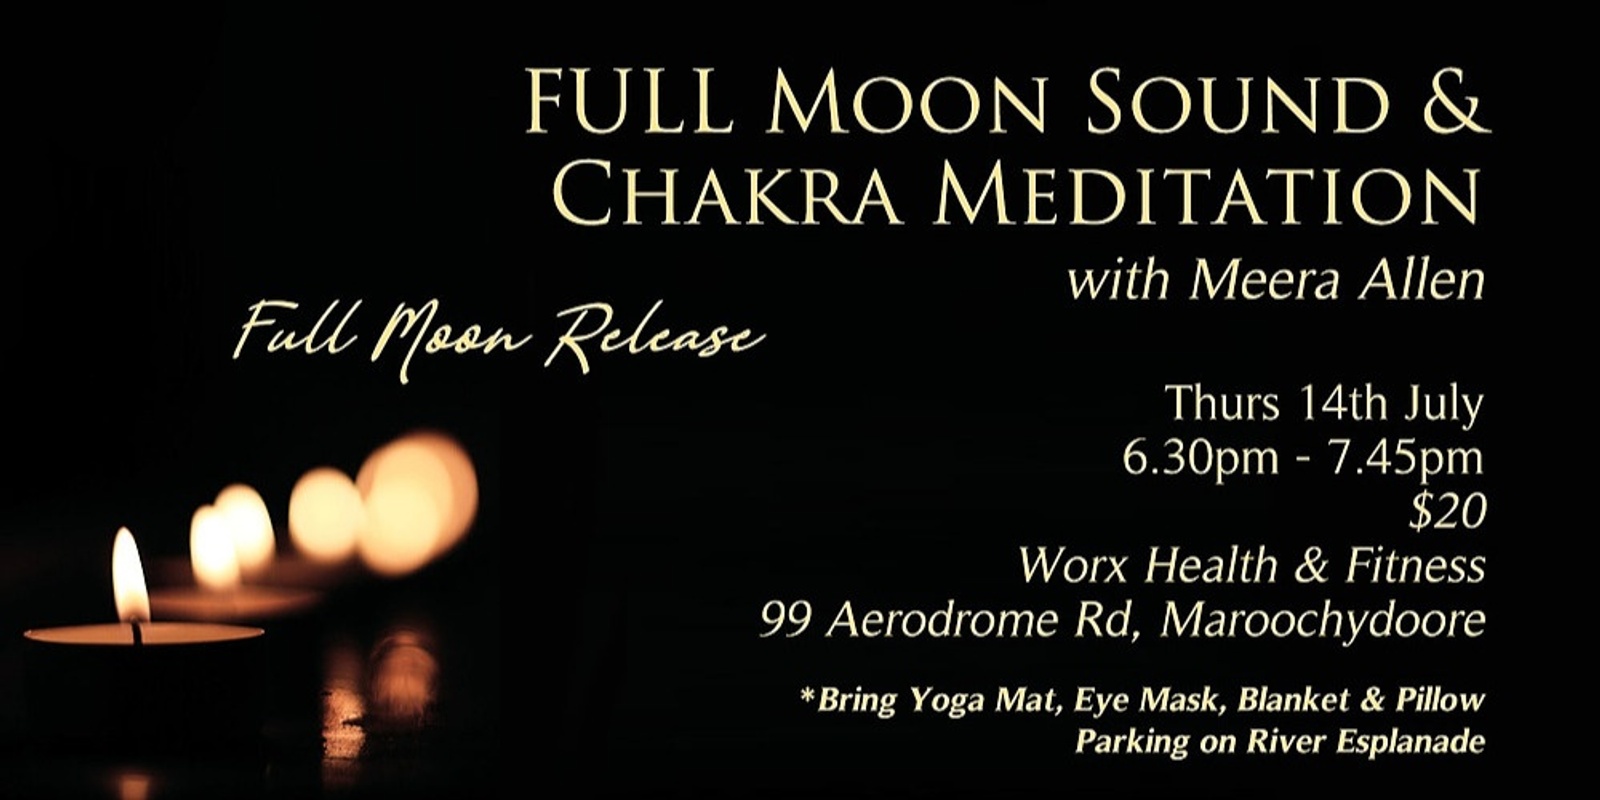 Full Moon Meditation and Sound